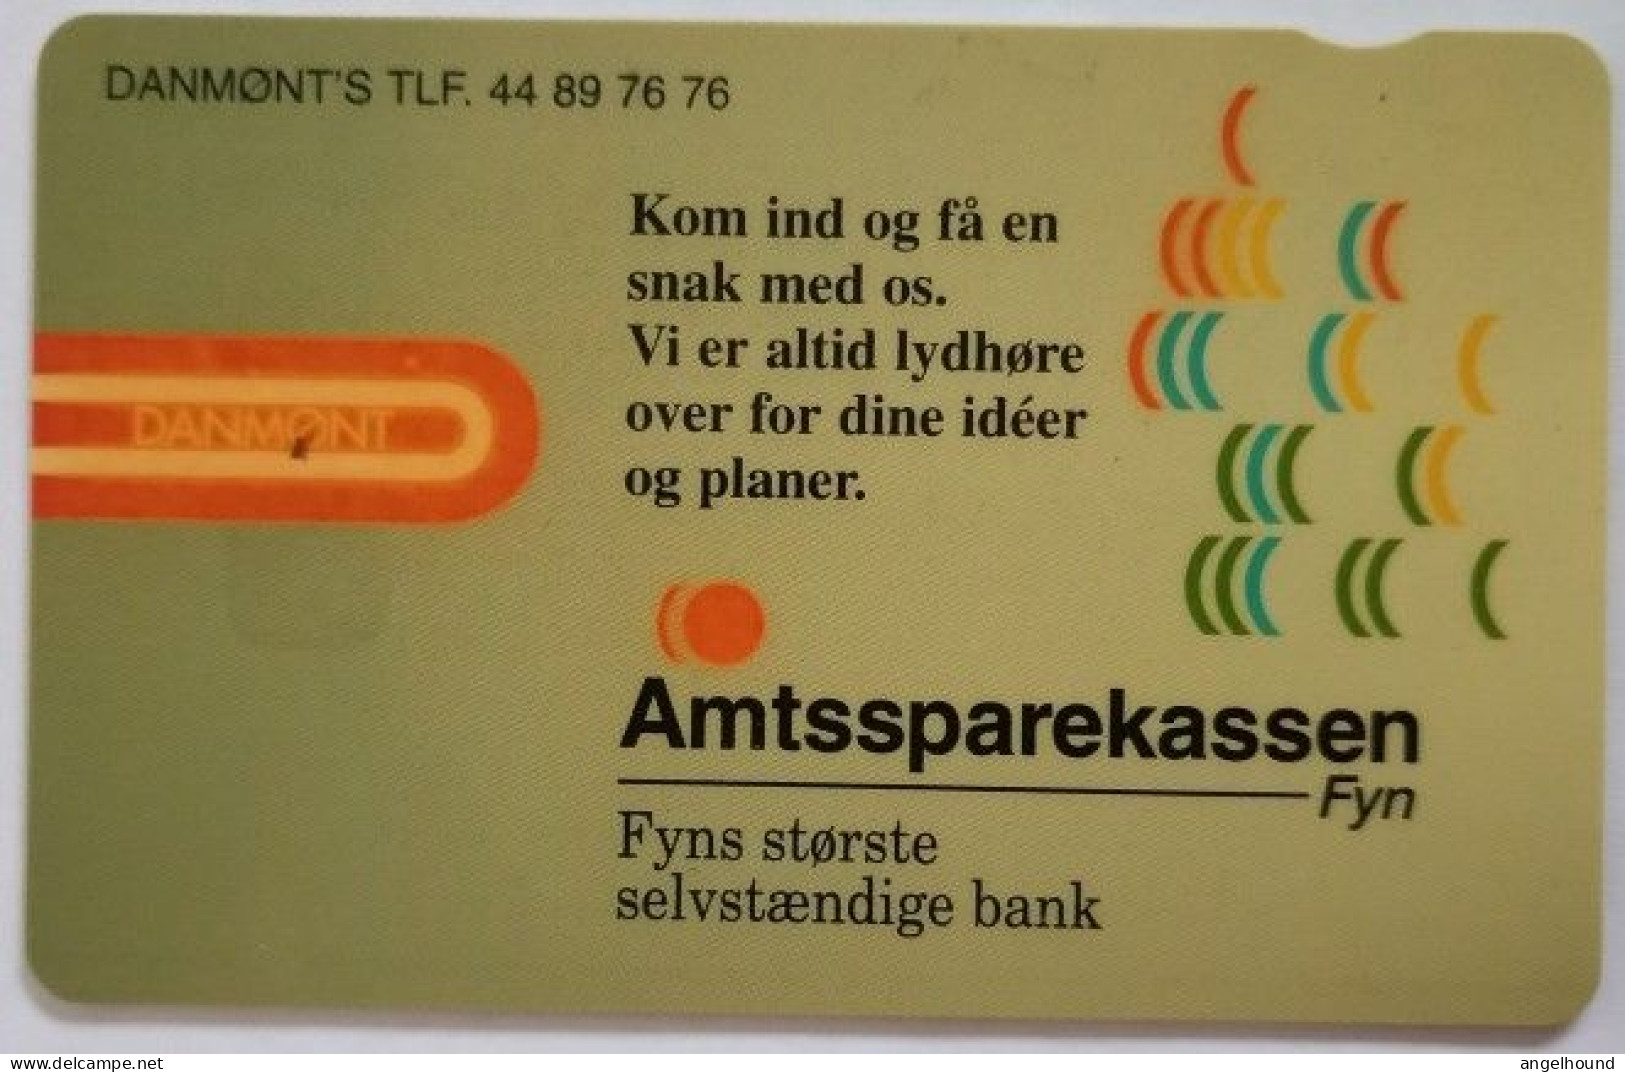 Denmark Danmont 100 Kr. - Amtssparekassen Fyn Golden Retriever - Danimarca